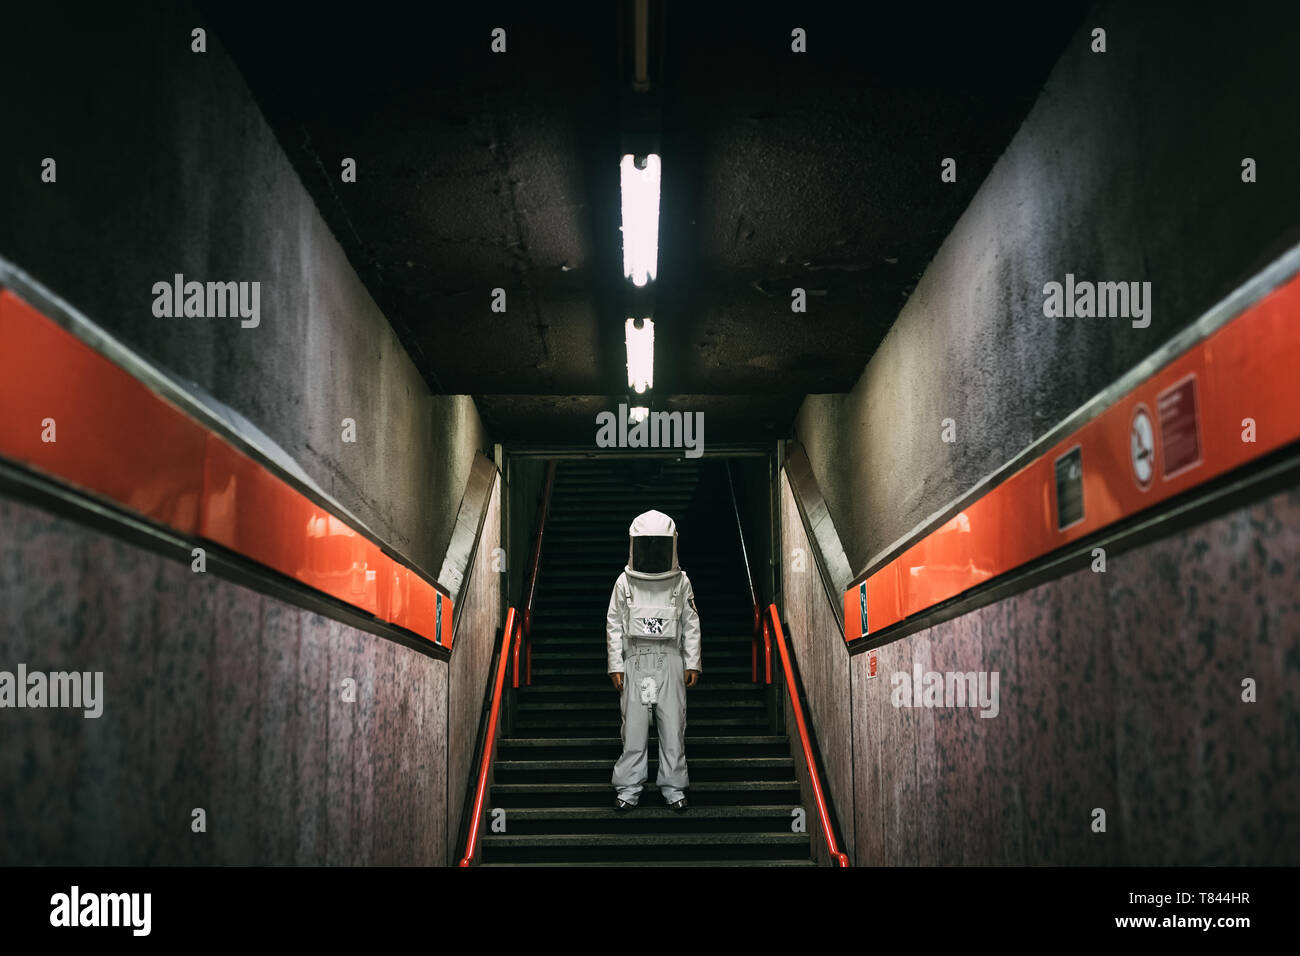 Astronaut on stairway in train platform Stock Photo